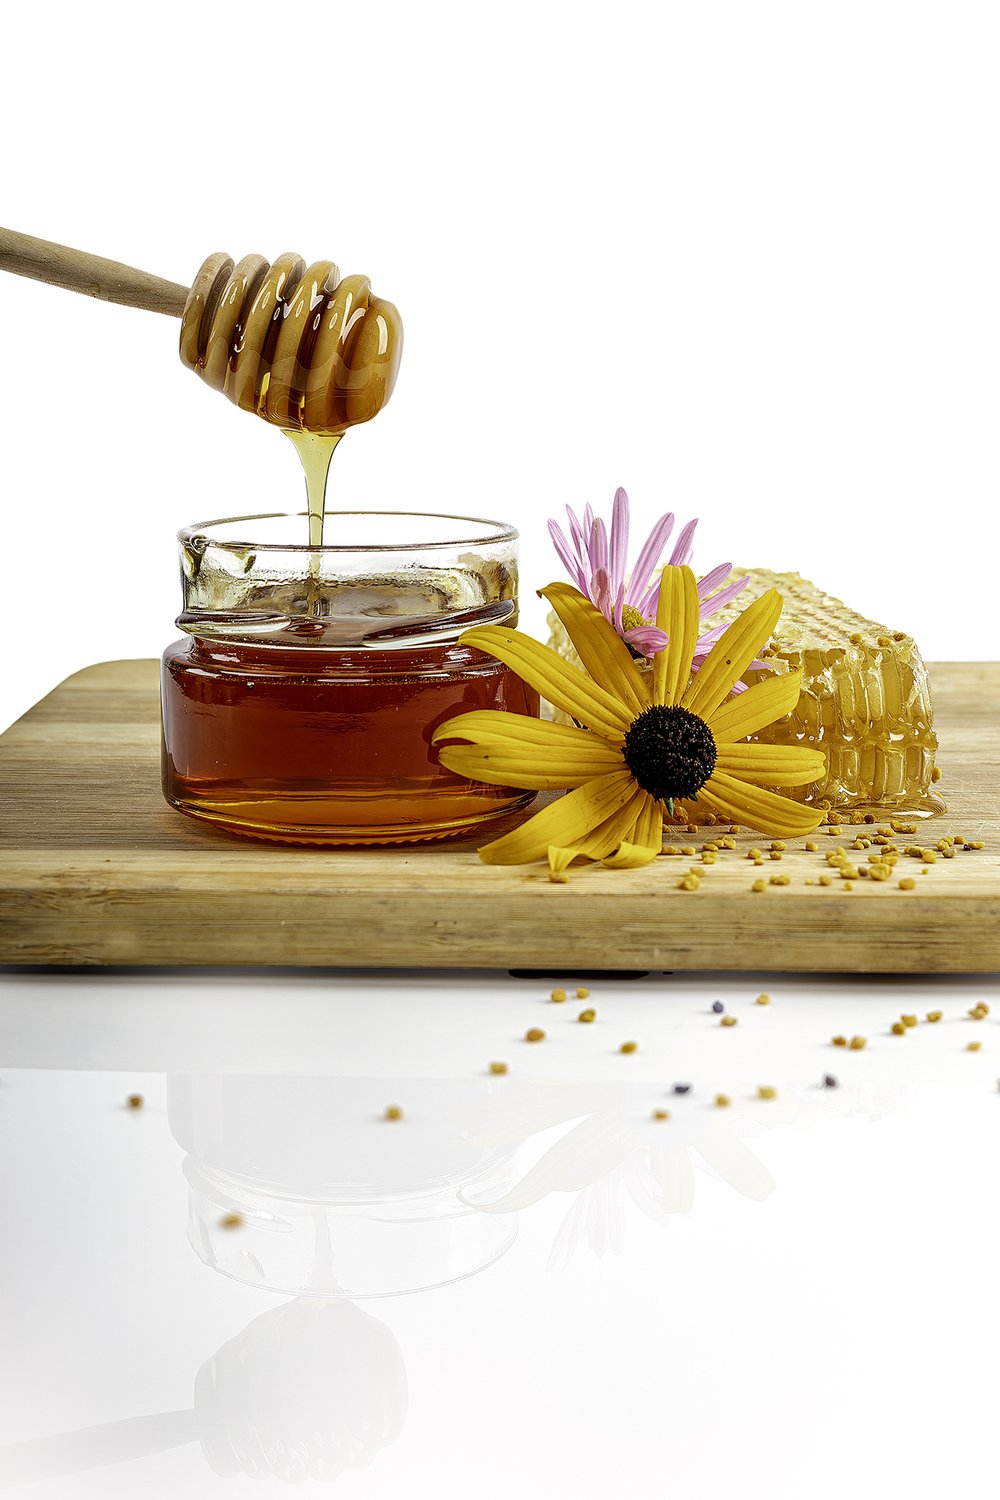 Miel liquide — Miel l'été doré